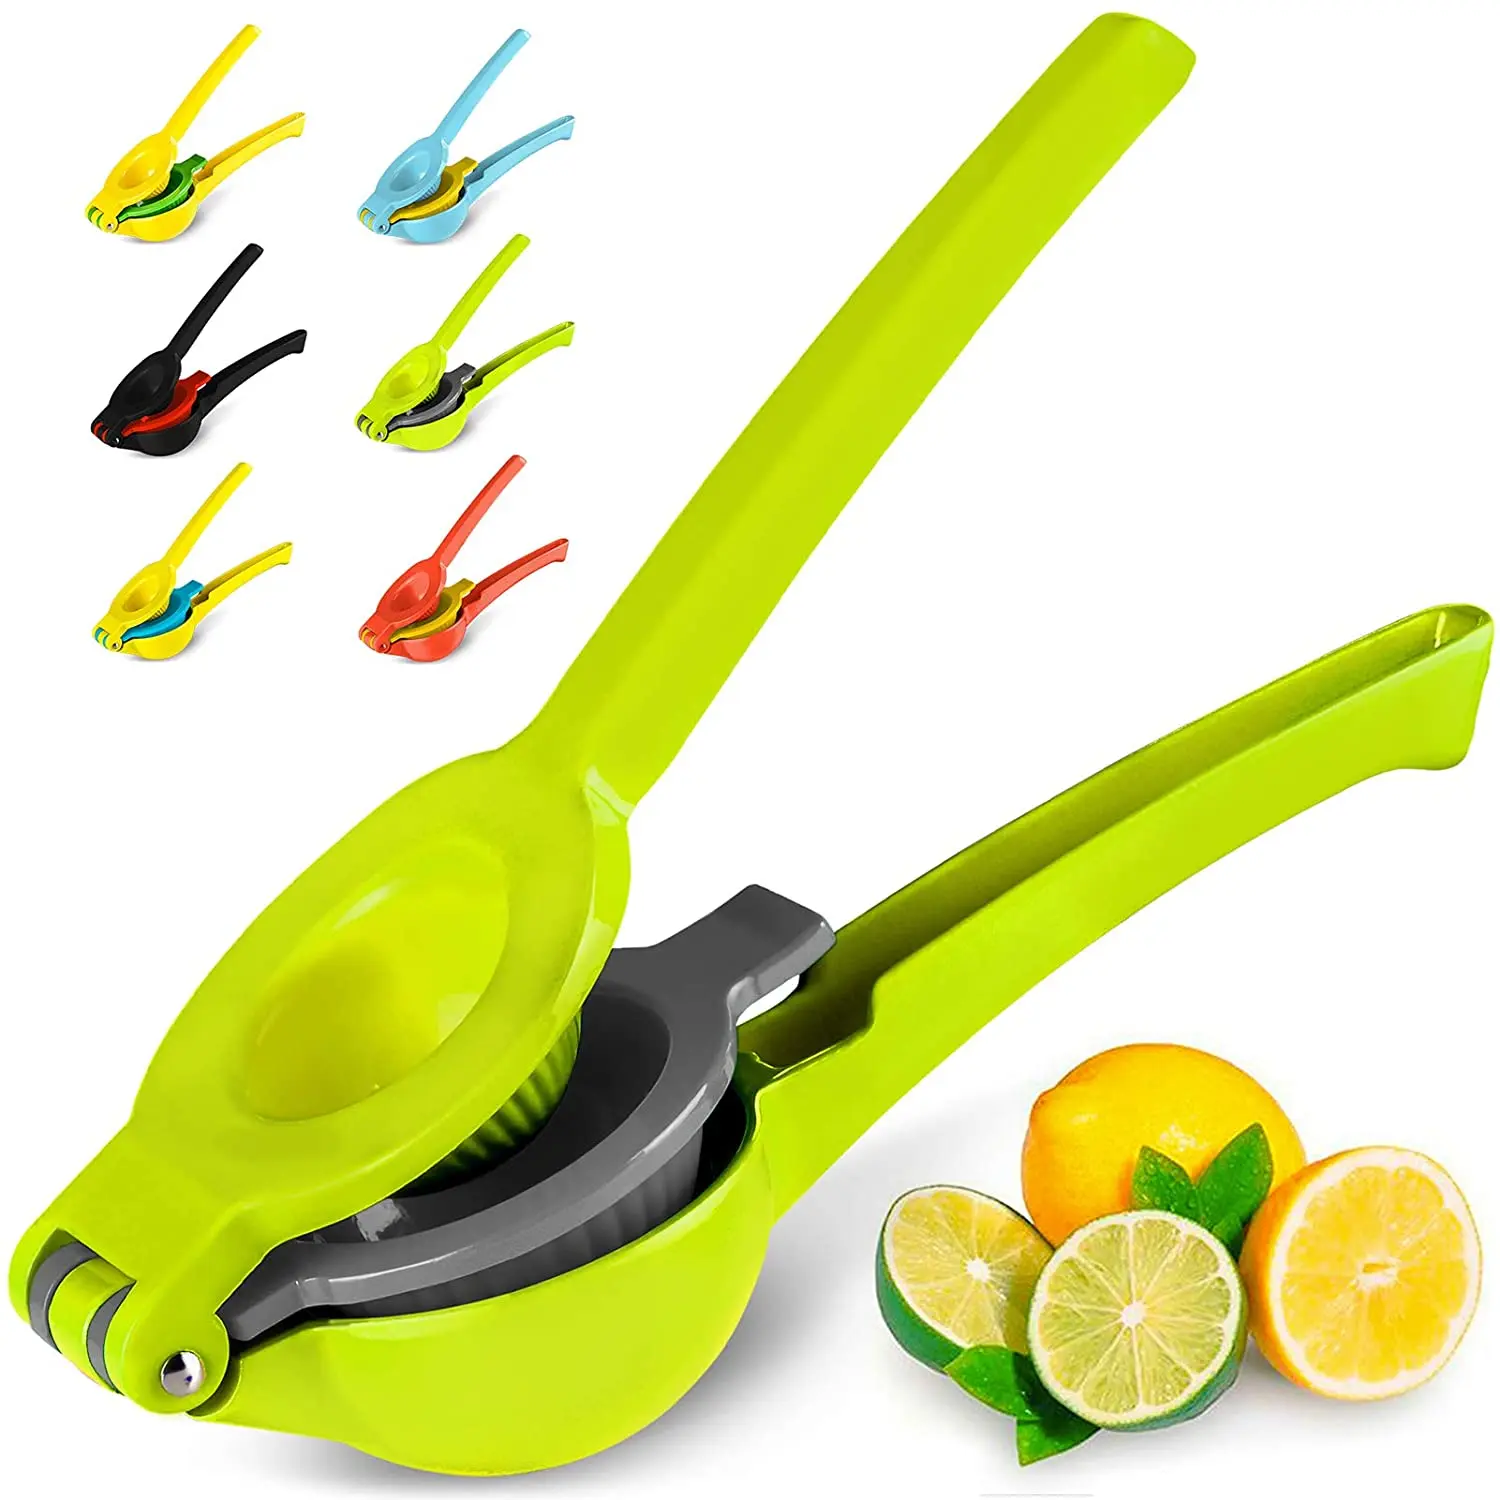 

Top Supplier Upgraded Lemon Squeezer Easy-To-Use Manual Press Ergonomically Designed Lemon Squeezer